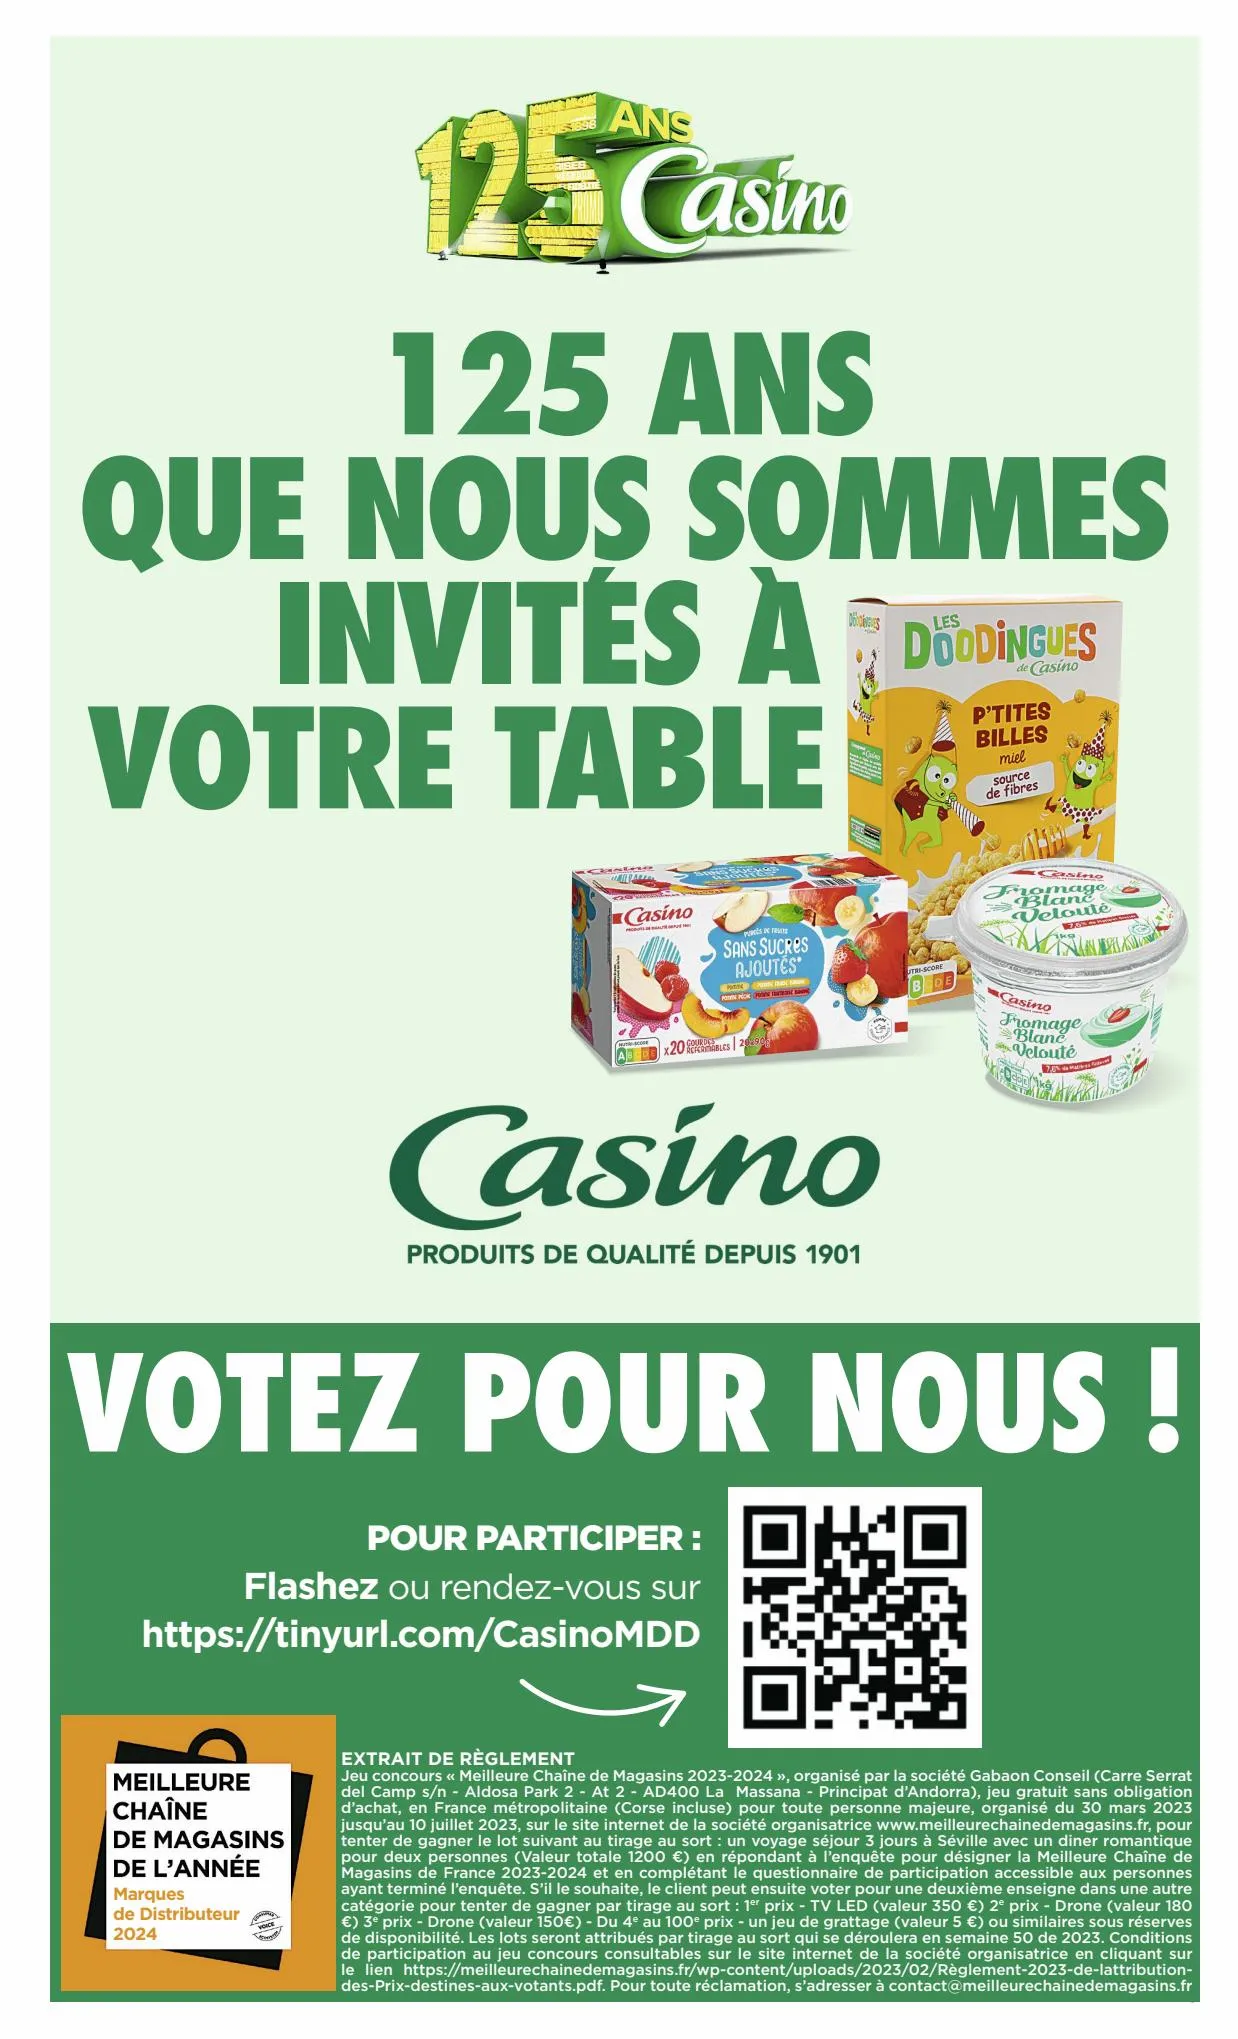 Catalogue Catalogue Casino Supermarchés, page 00019